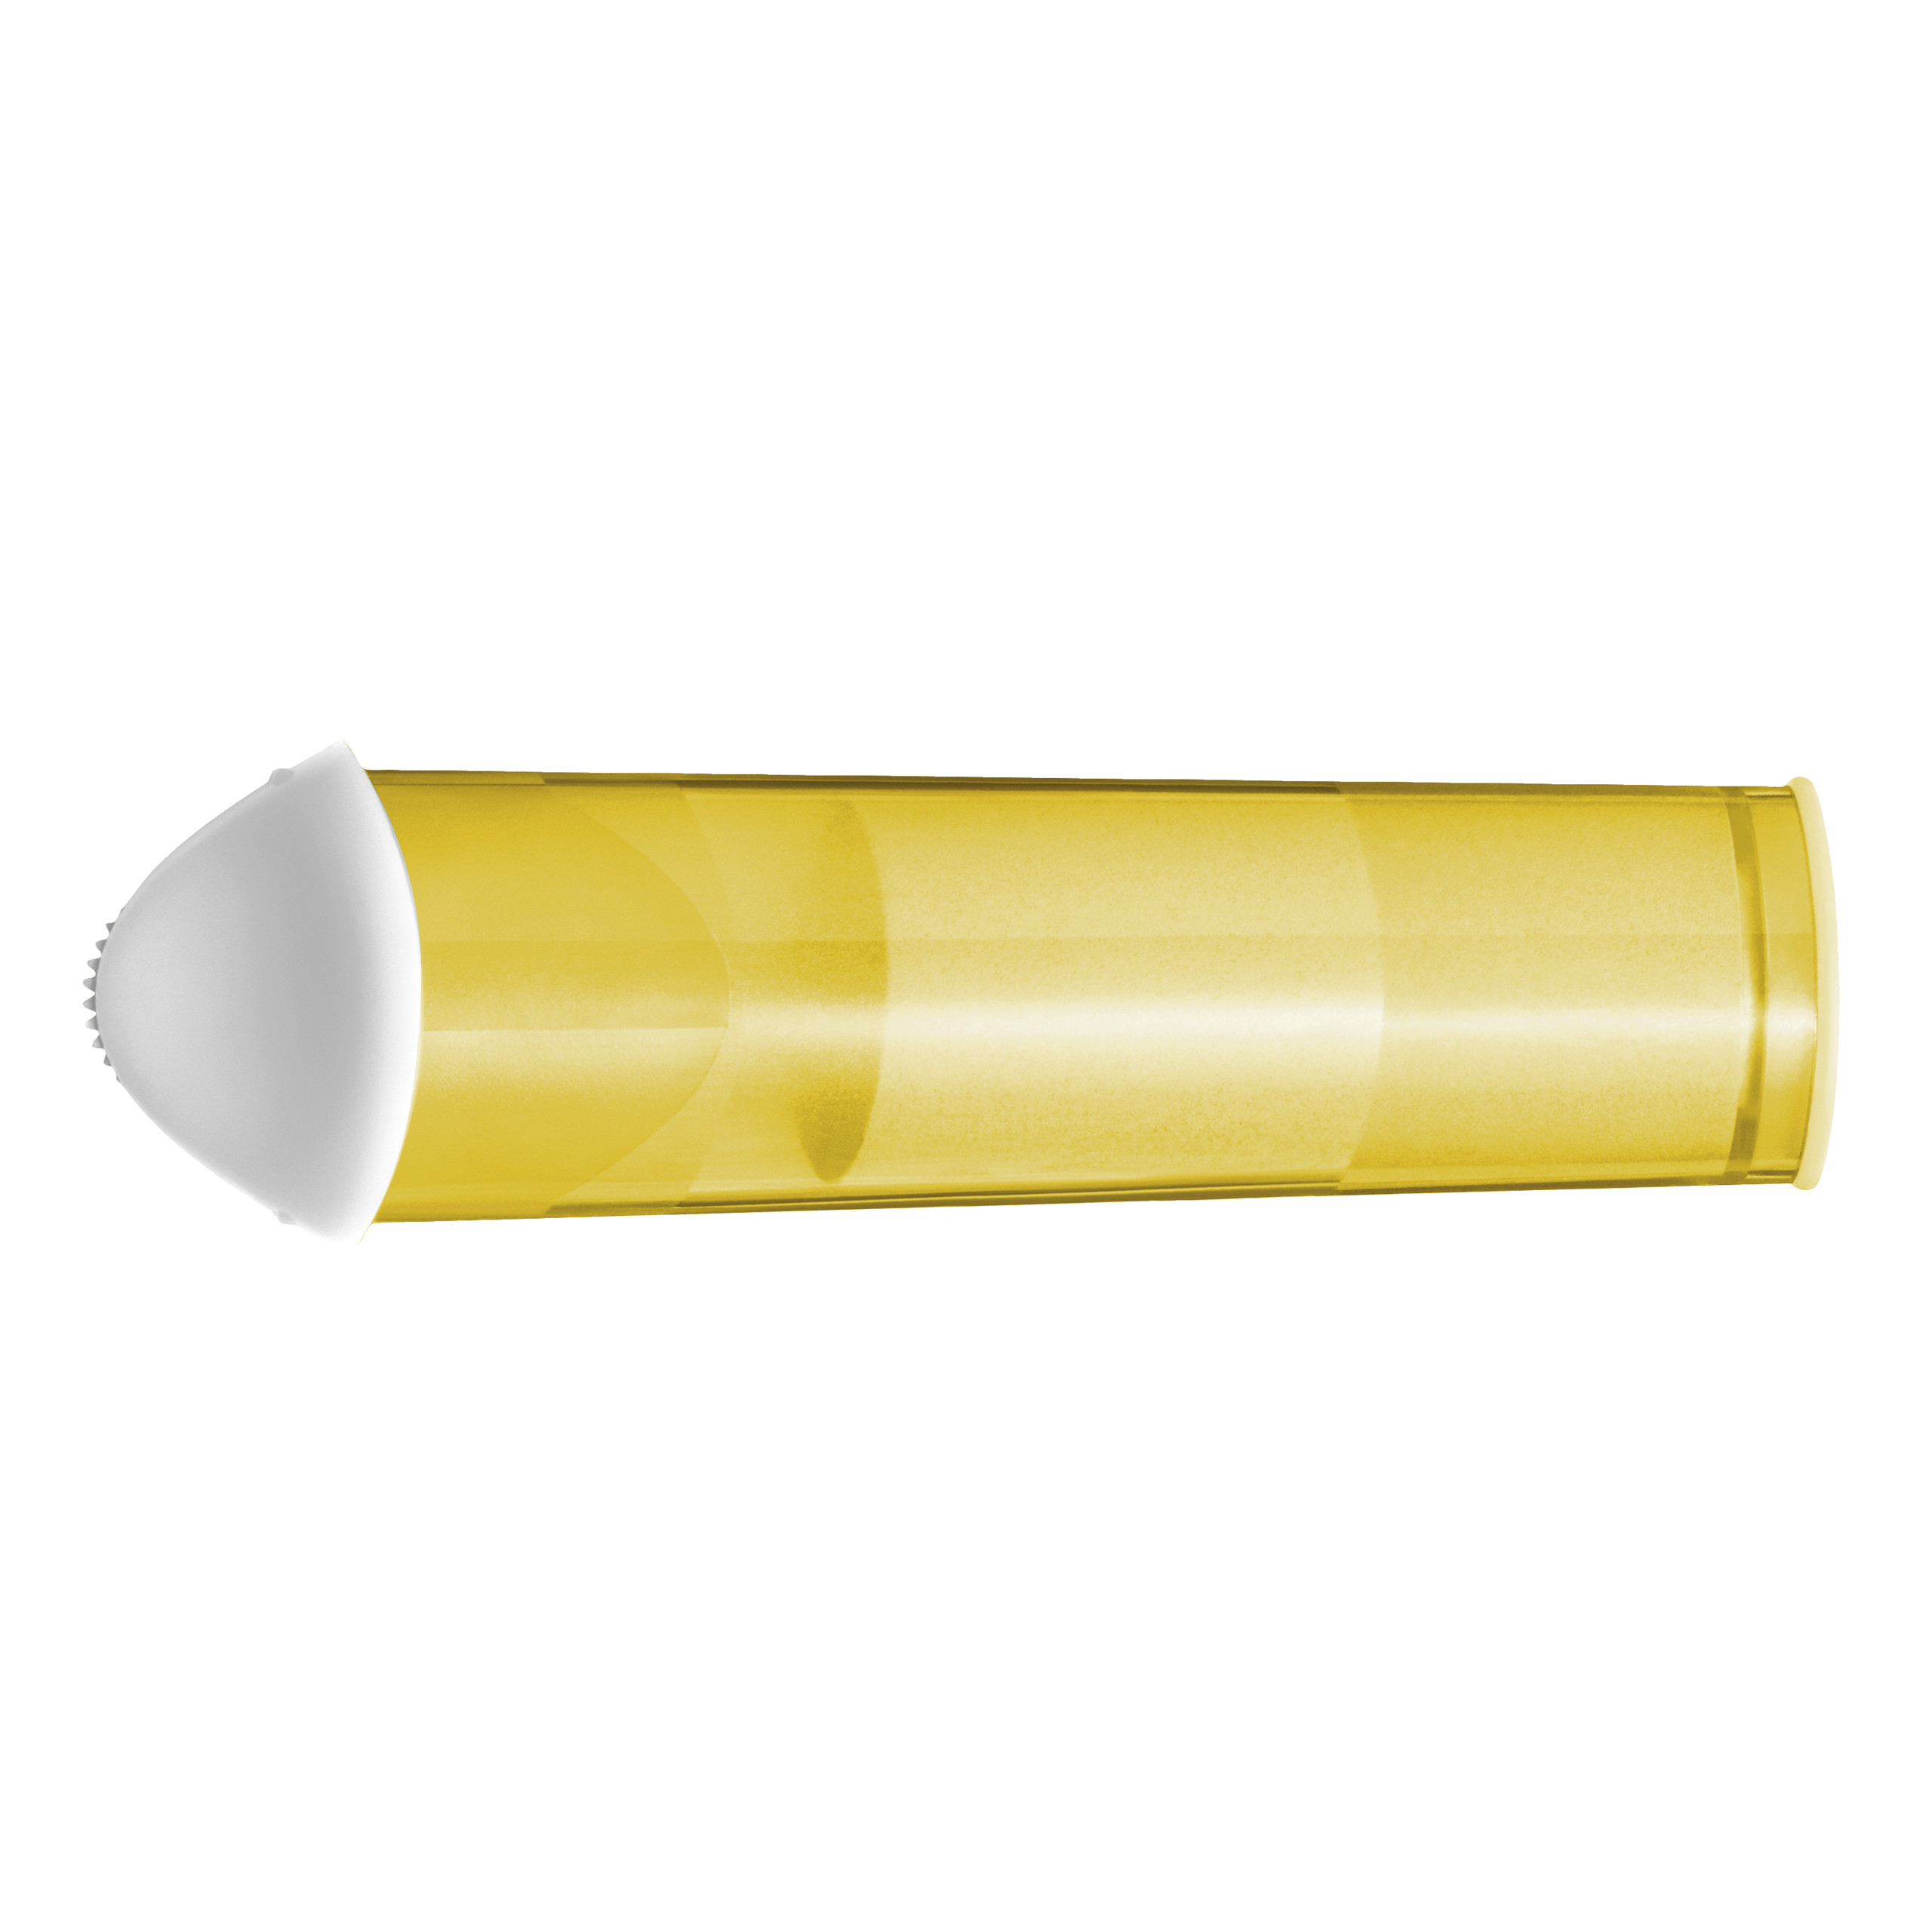 Chalk cartridge yellow ergonomic, 1 St